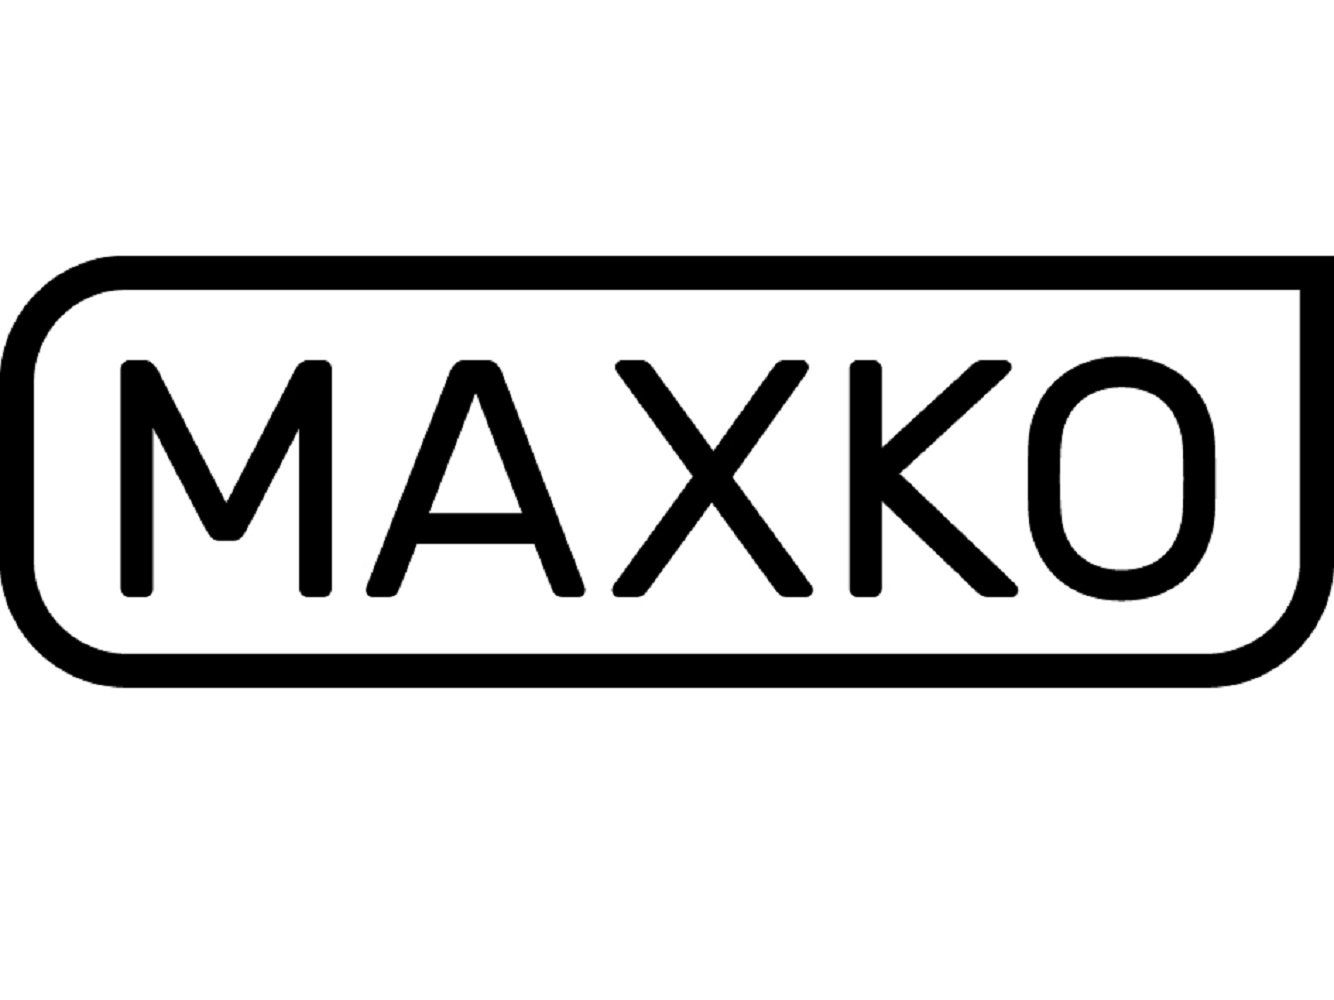 Maxko